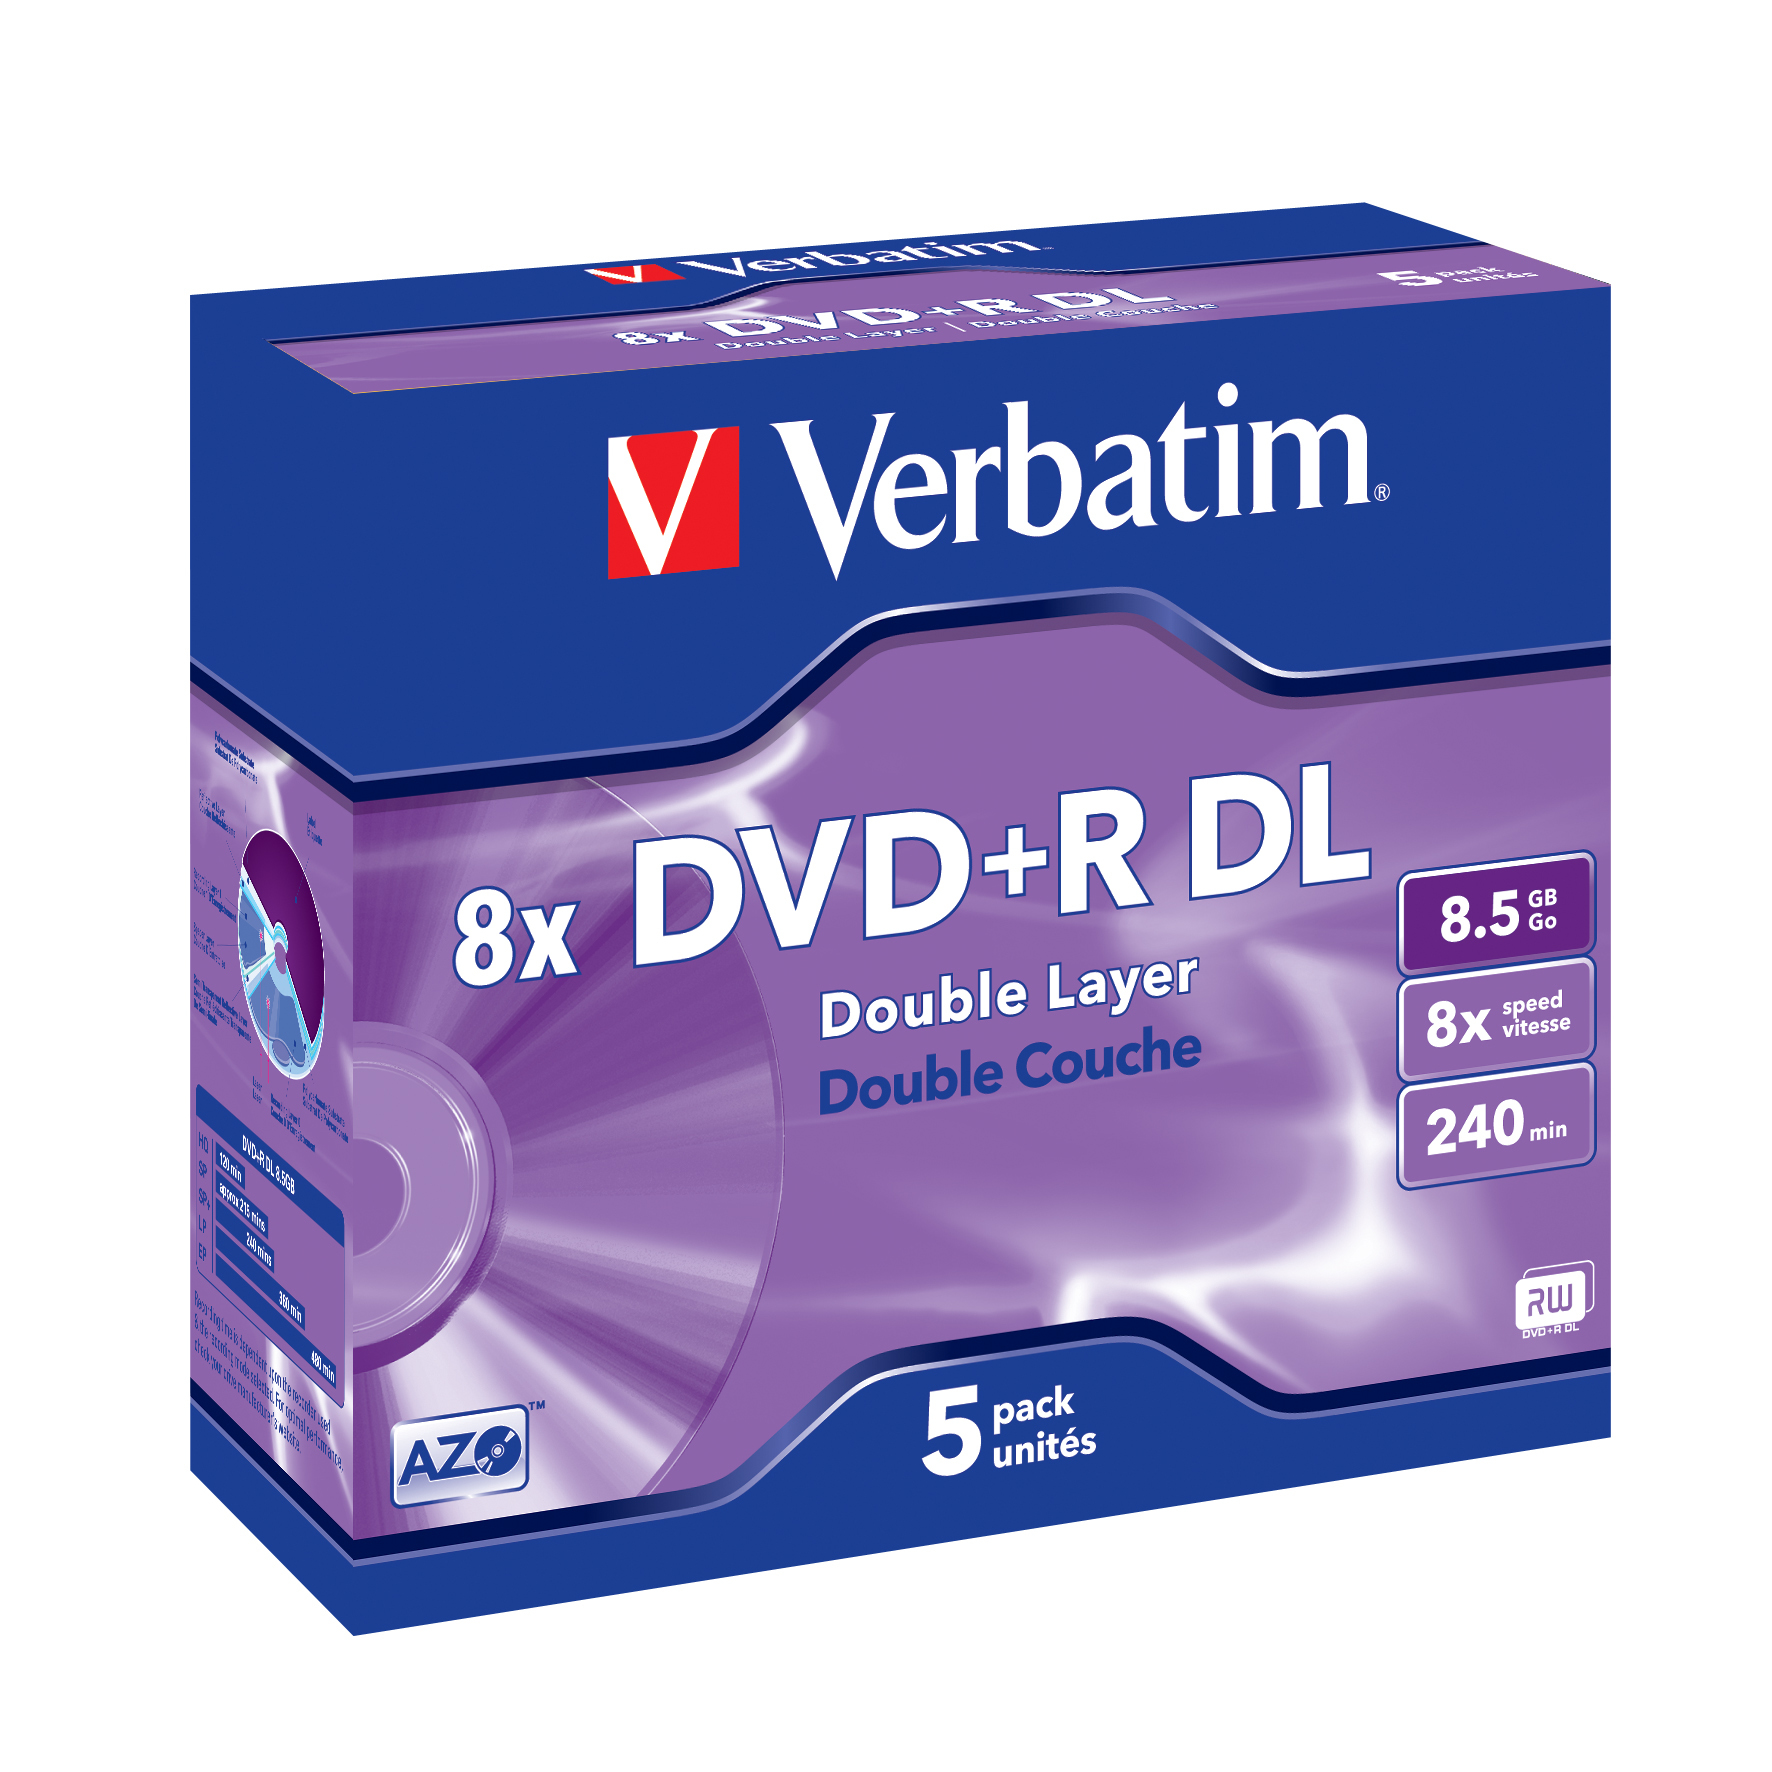 VERBATIM CD DVD vierge DVD+R 5PKS 8.5GB DOUBLE LA pas cher 